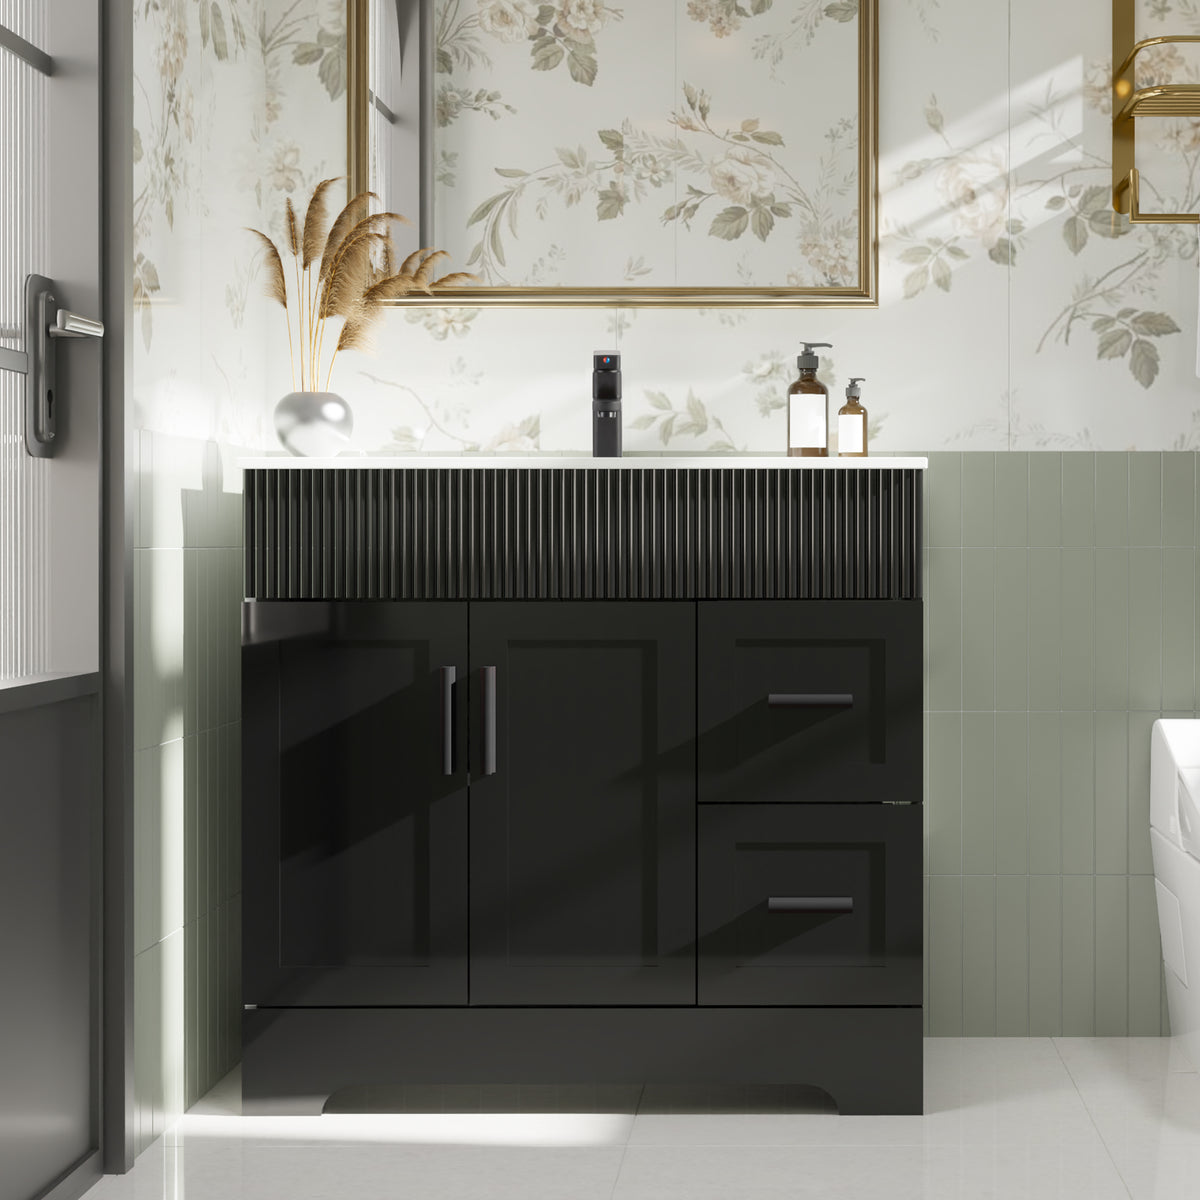 Luxurious 36" Freestanding Bathroom Vanity Combo with Single Undermount Sink